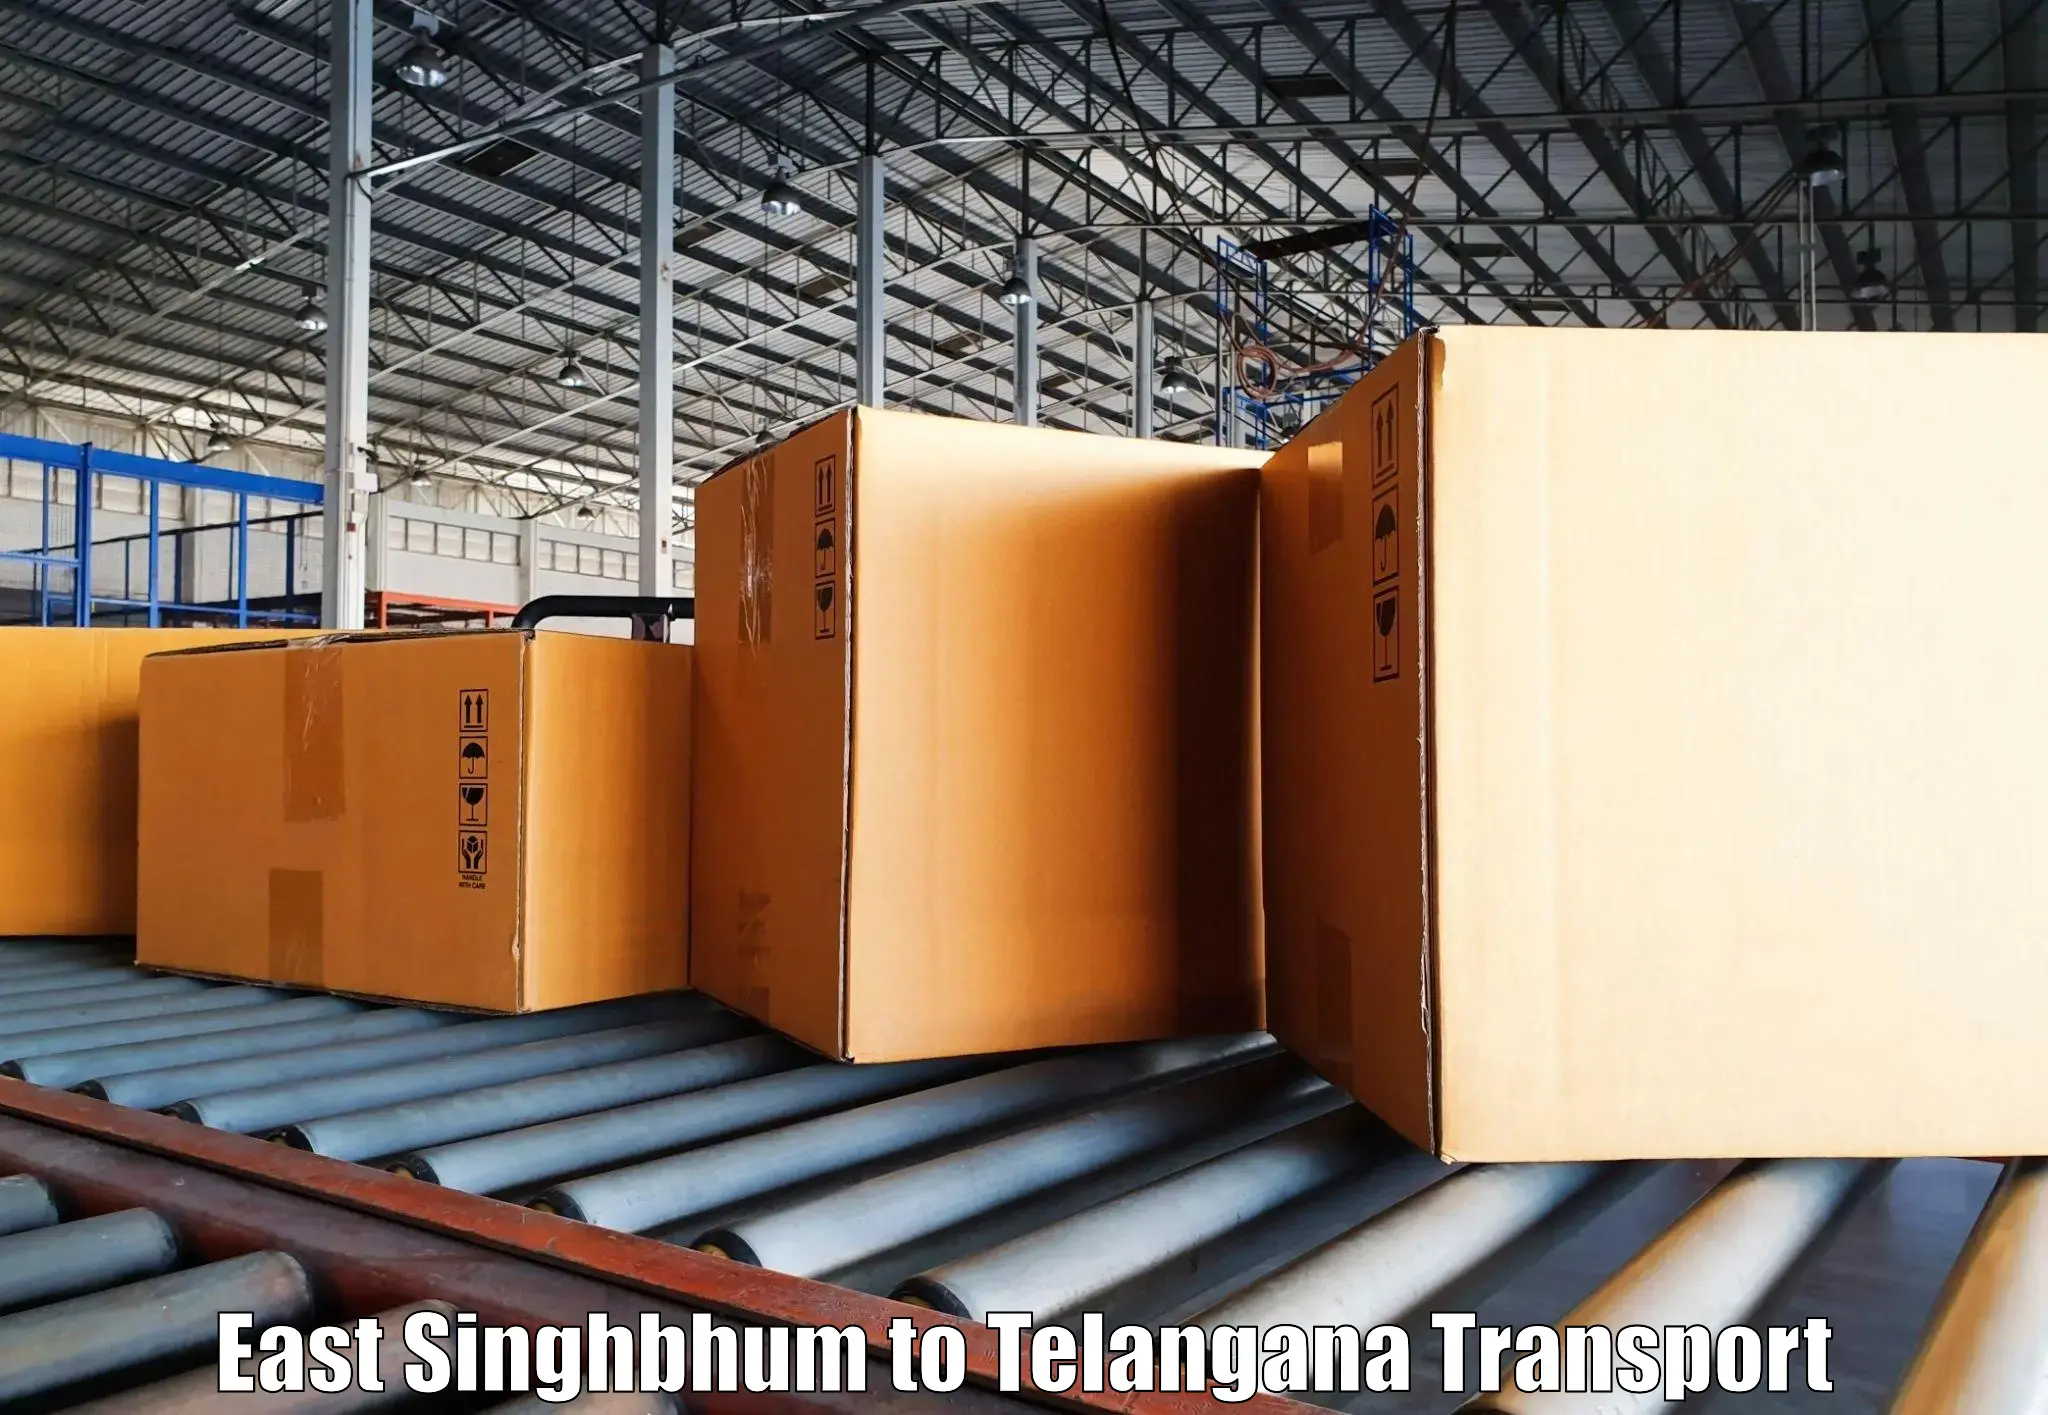 Transport shared services East Singhbhum to Devarakonda